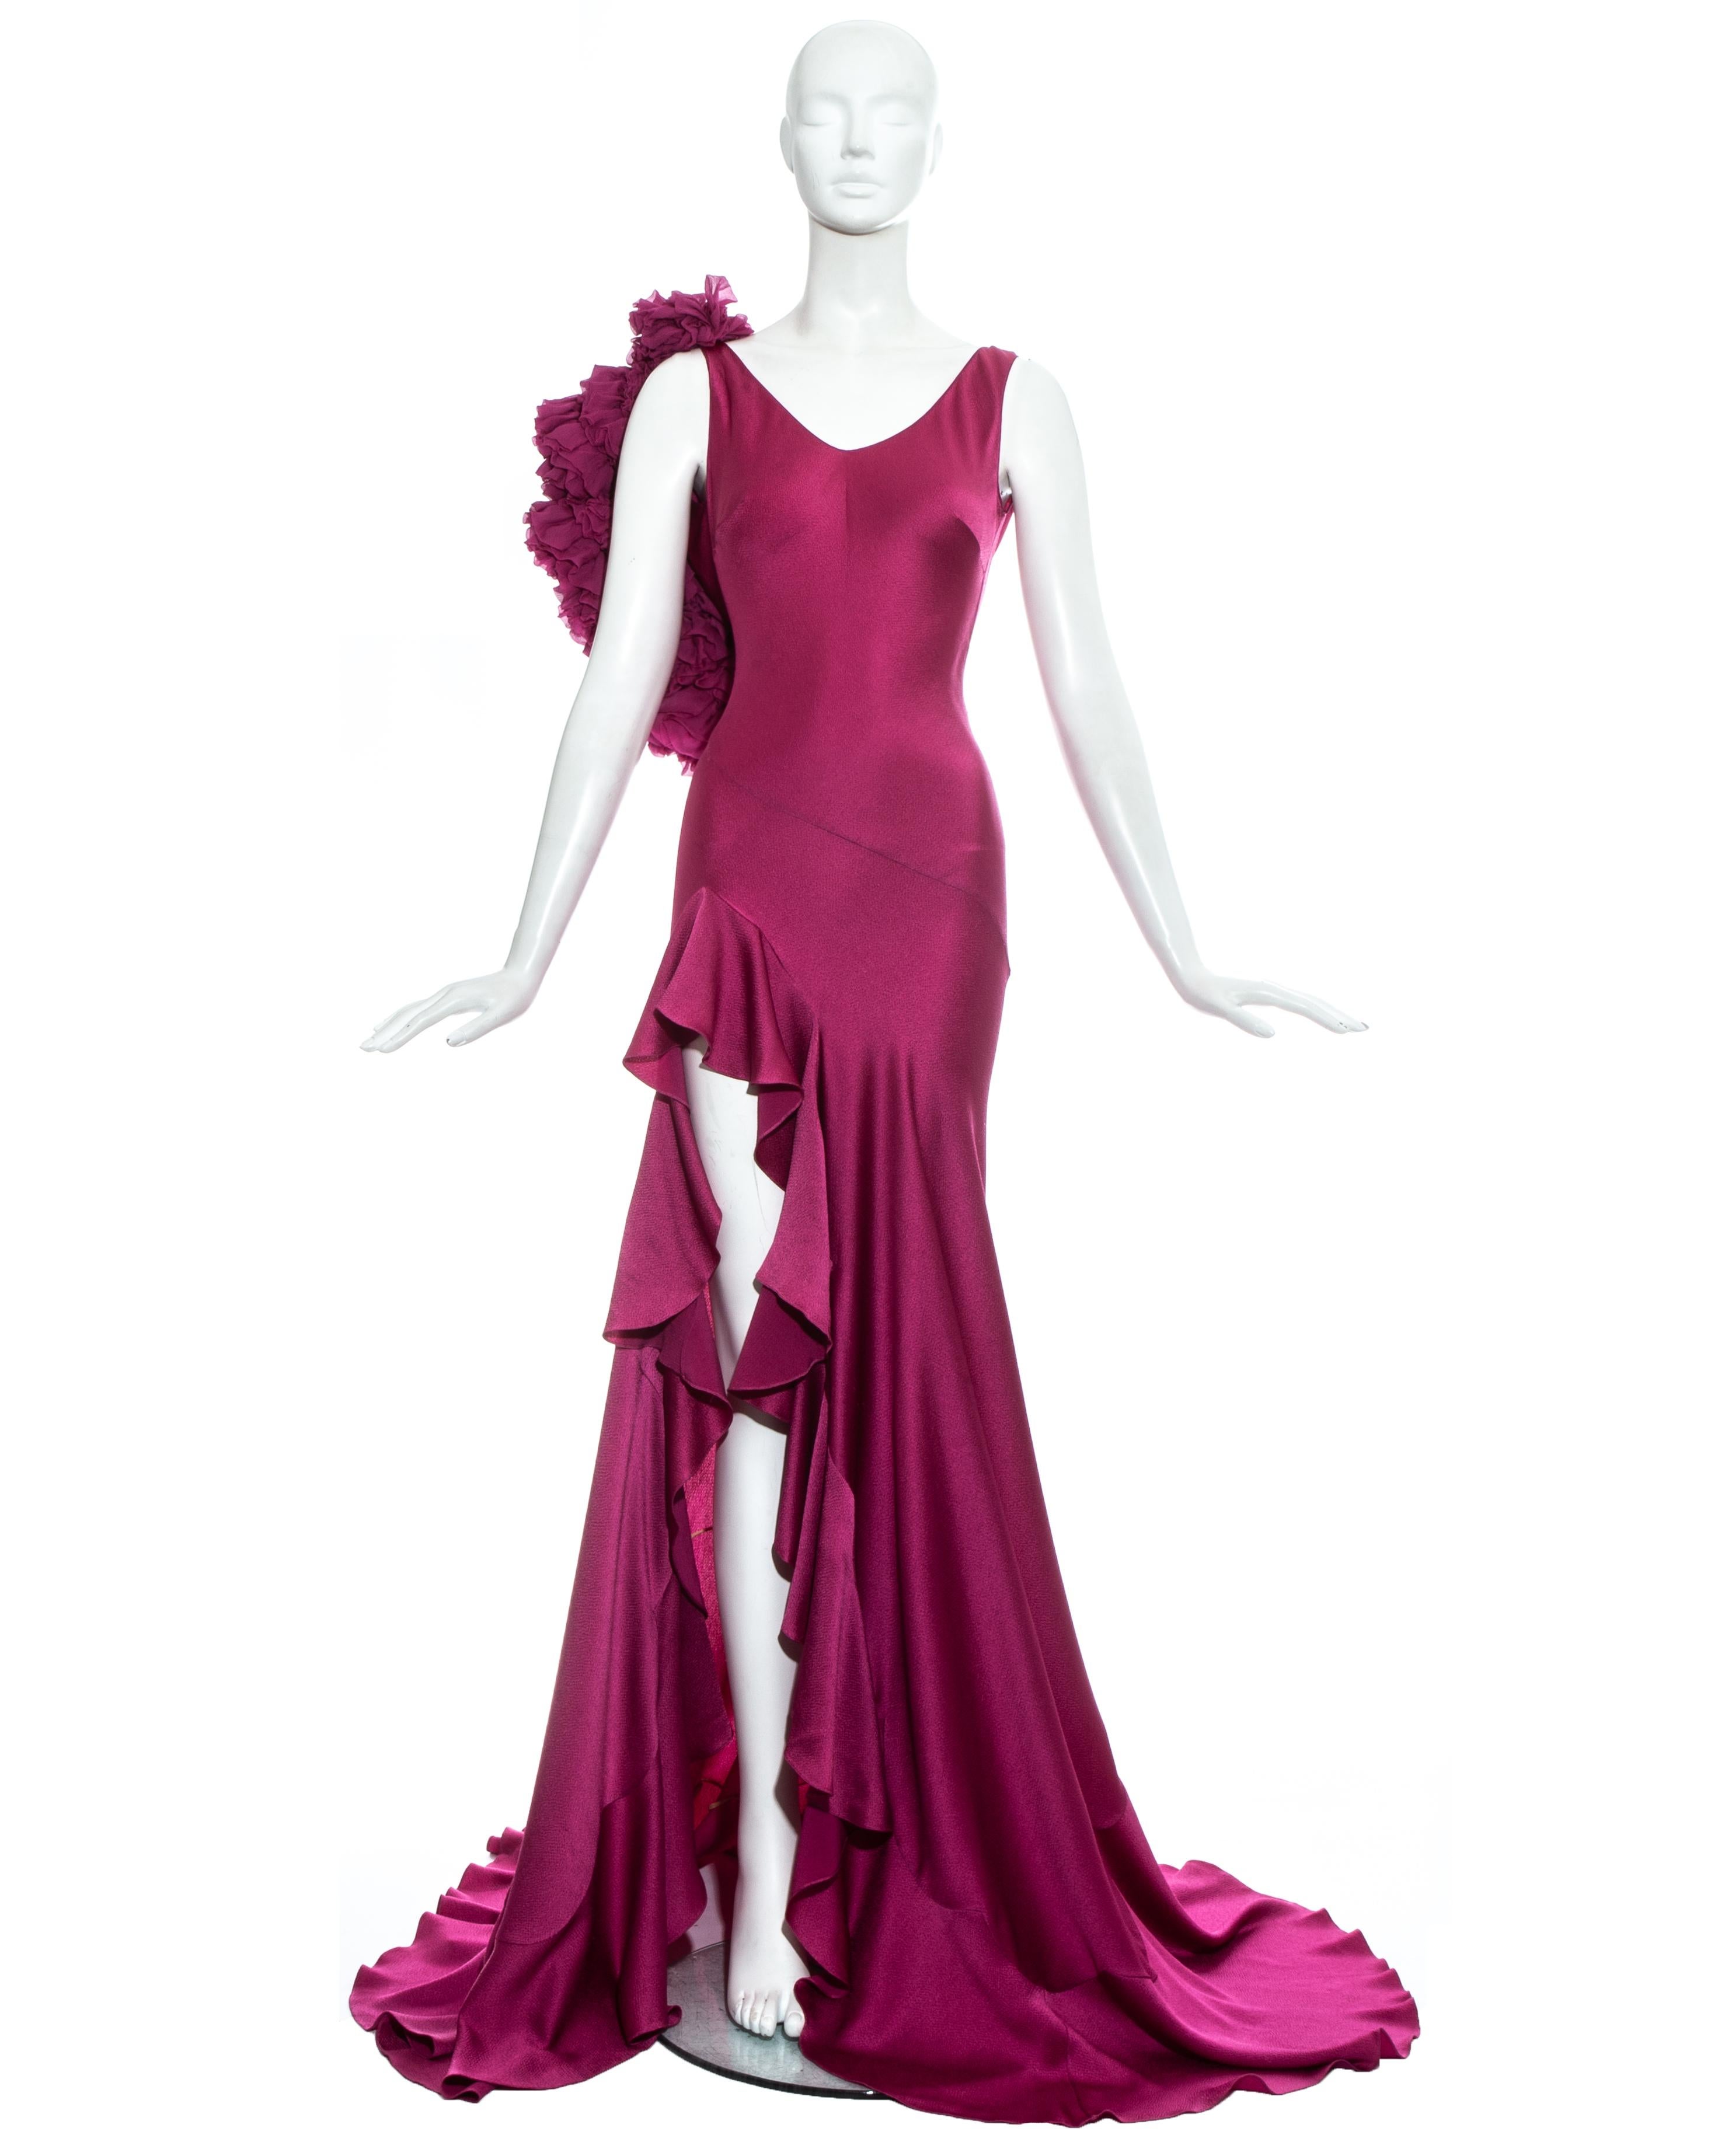 John Galliano; fuchsia silk bias cut flamenco inspired evening dress with high leg slit, flounce hem, low back and ruffled silk panel on one shoulder.

Fall-Winter 1995 

